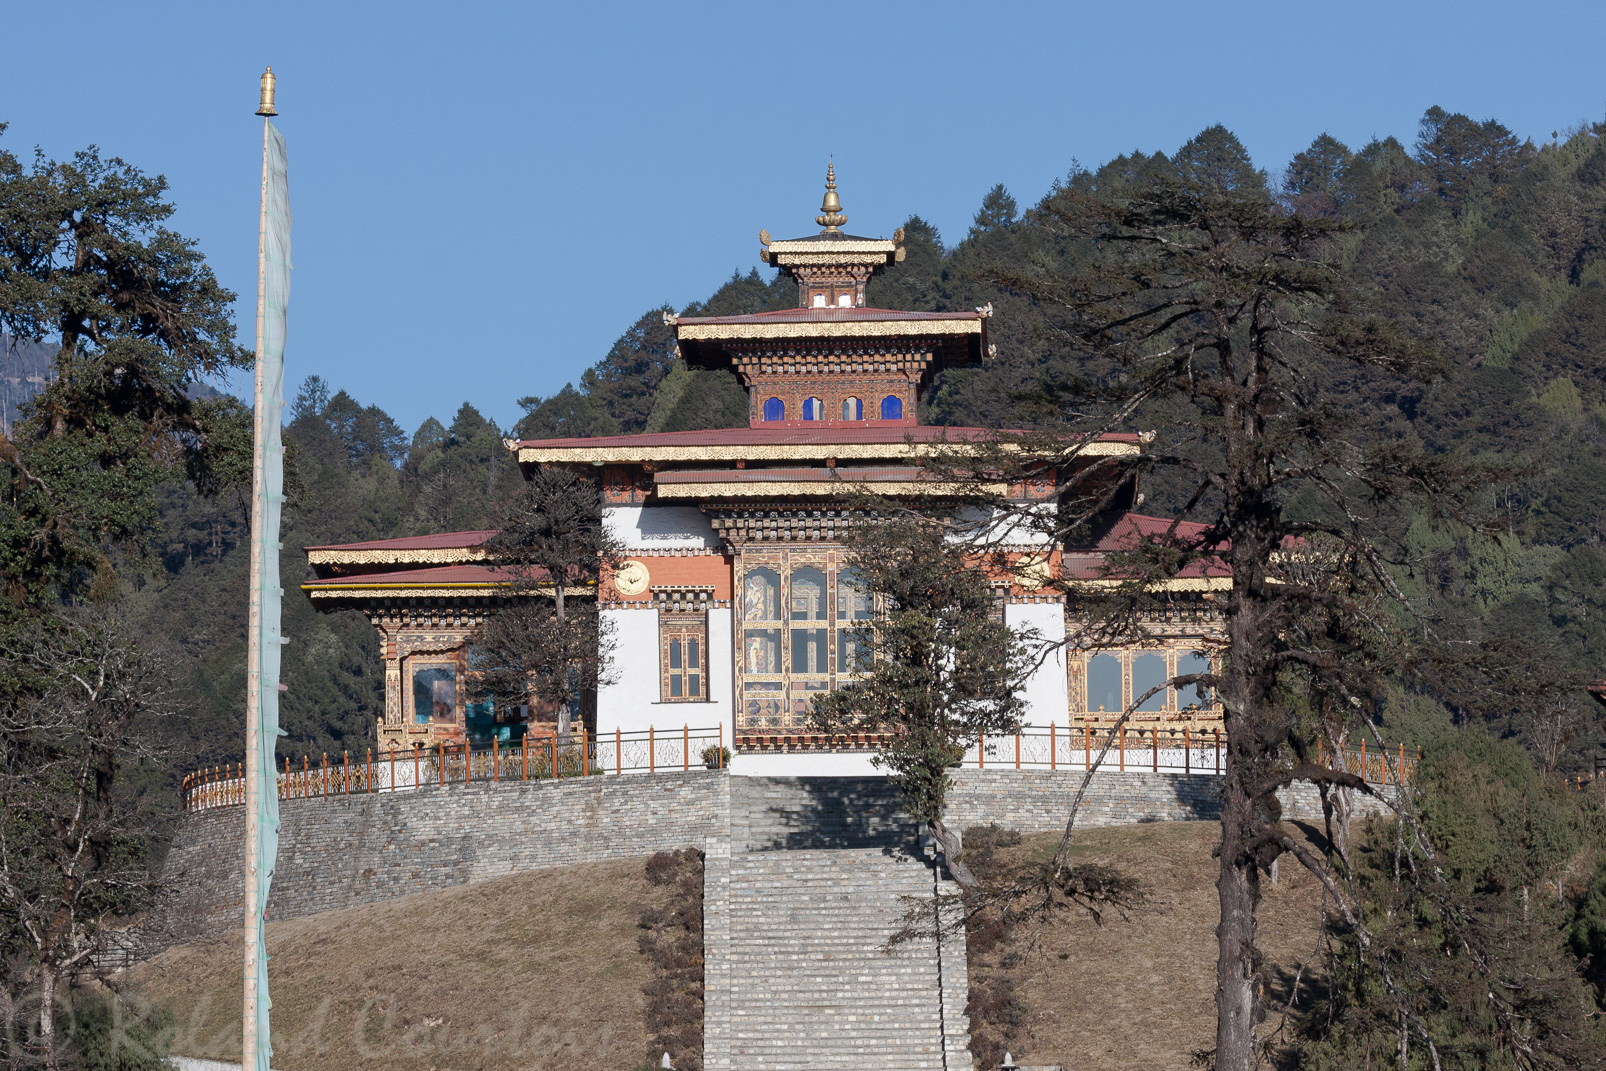 Druk Wangyal, ensemble impressionant construit à l’initiative de la reine-mère Ashi Dorje Wangmo.